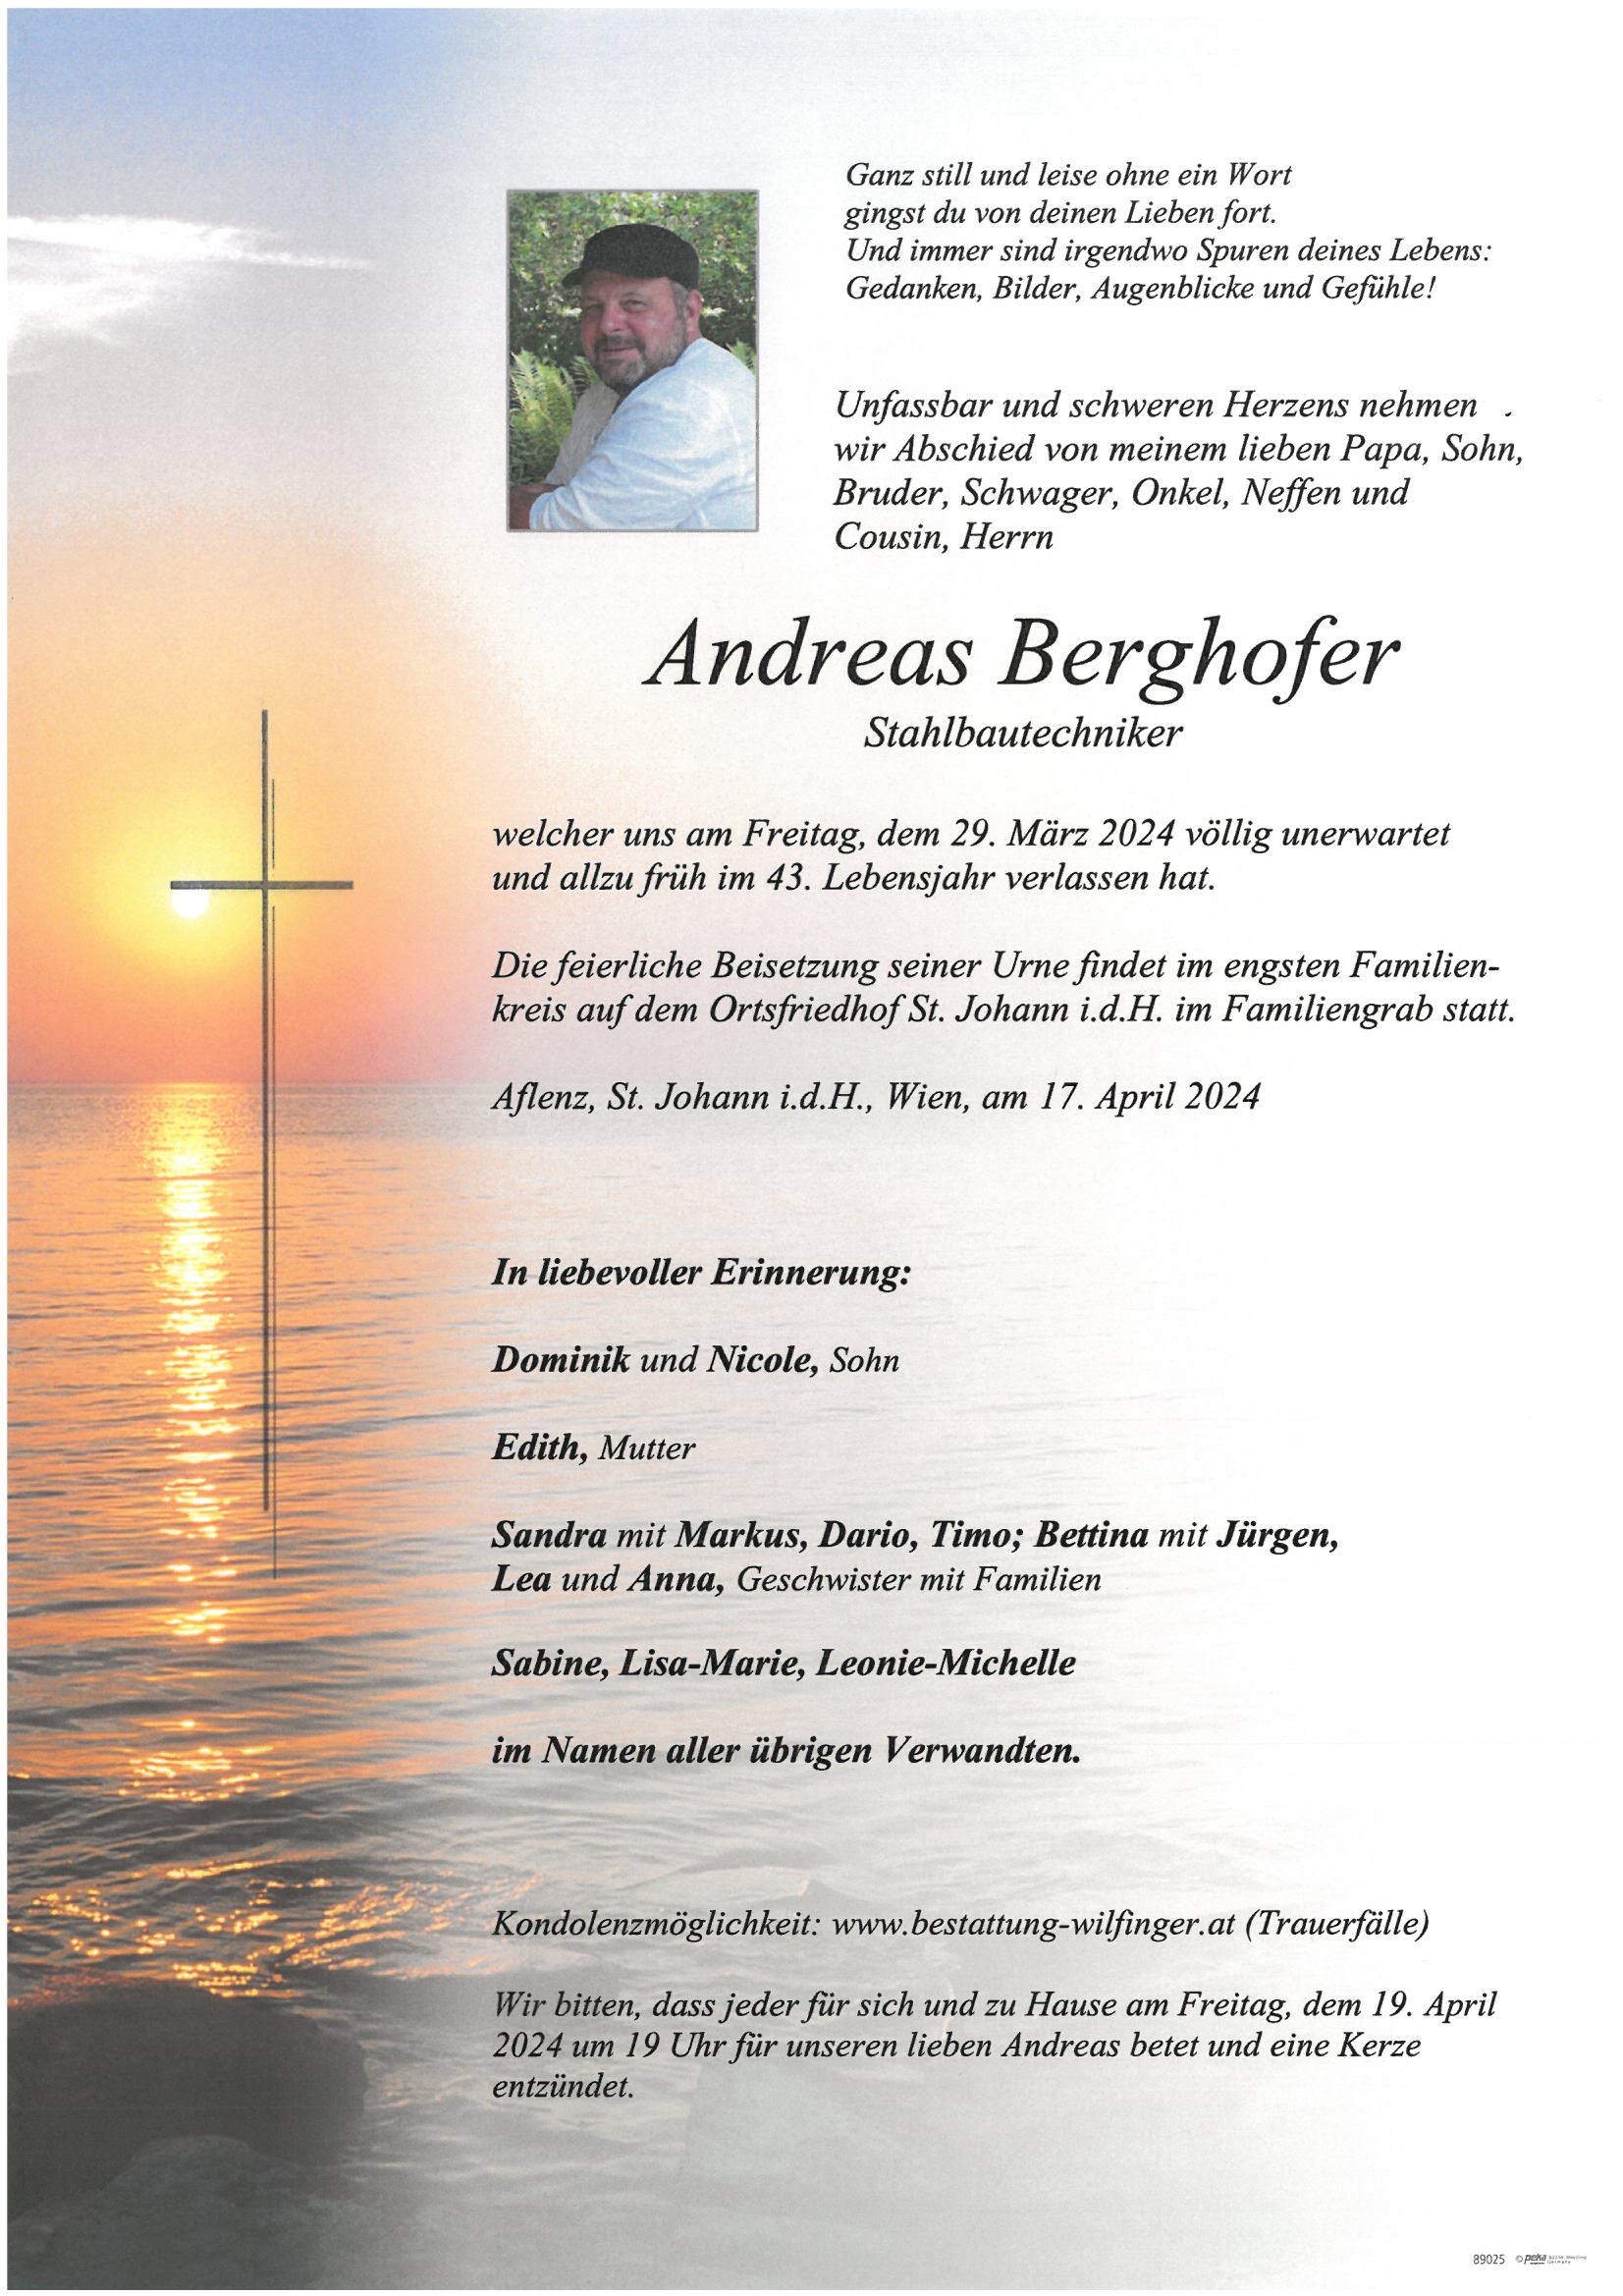 Andreas Berghofer, Wien-St. Johann i.d.H.